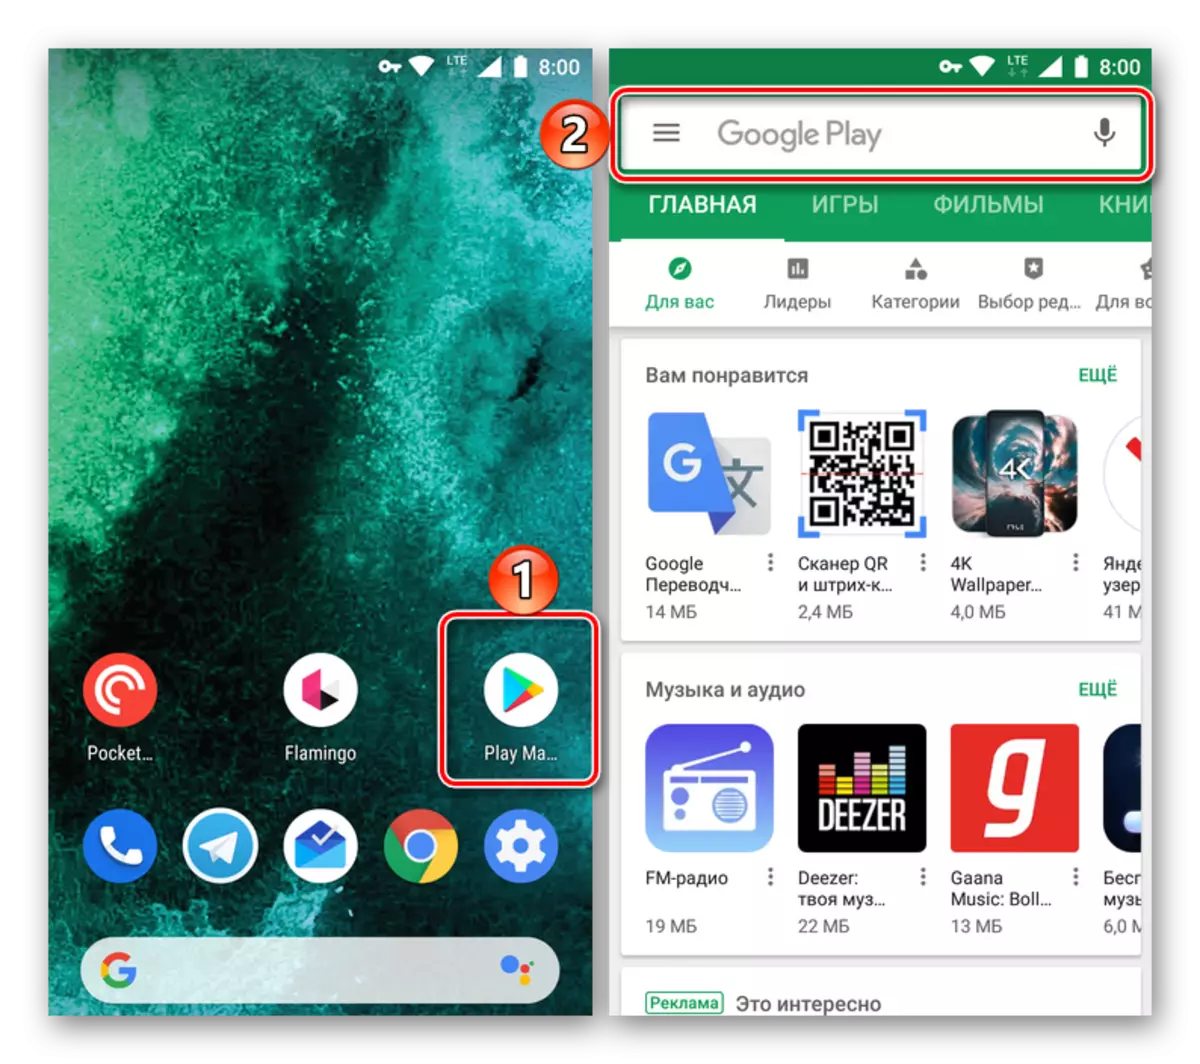 Herin Widget Li Widget Li ser Google Play Market On Android Watches